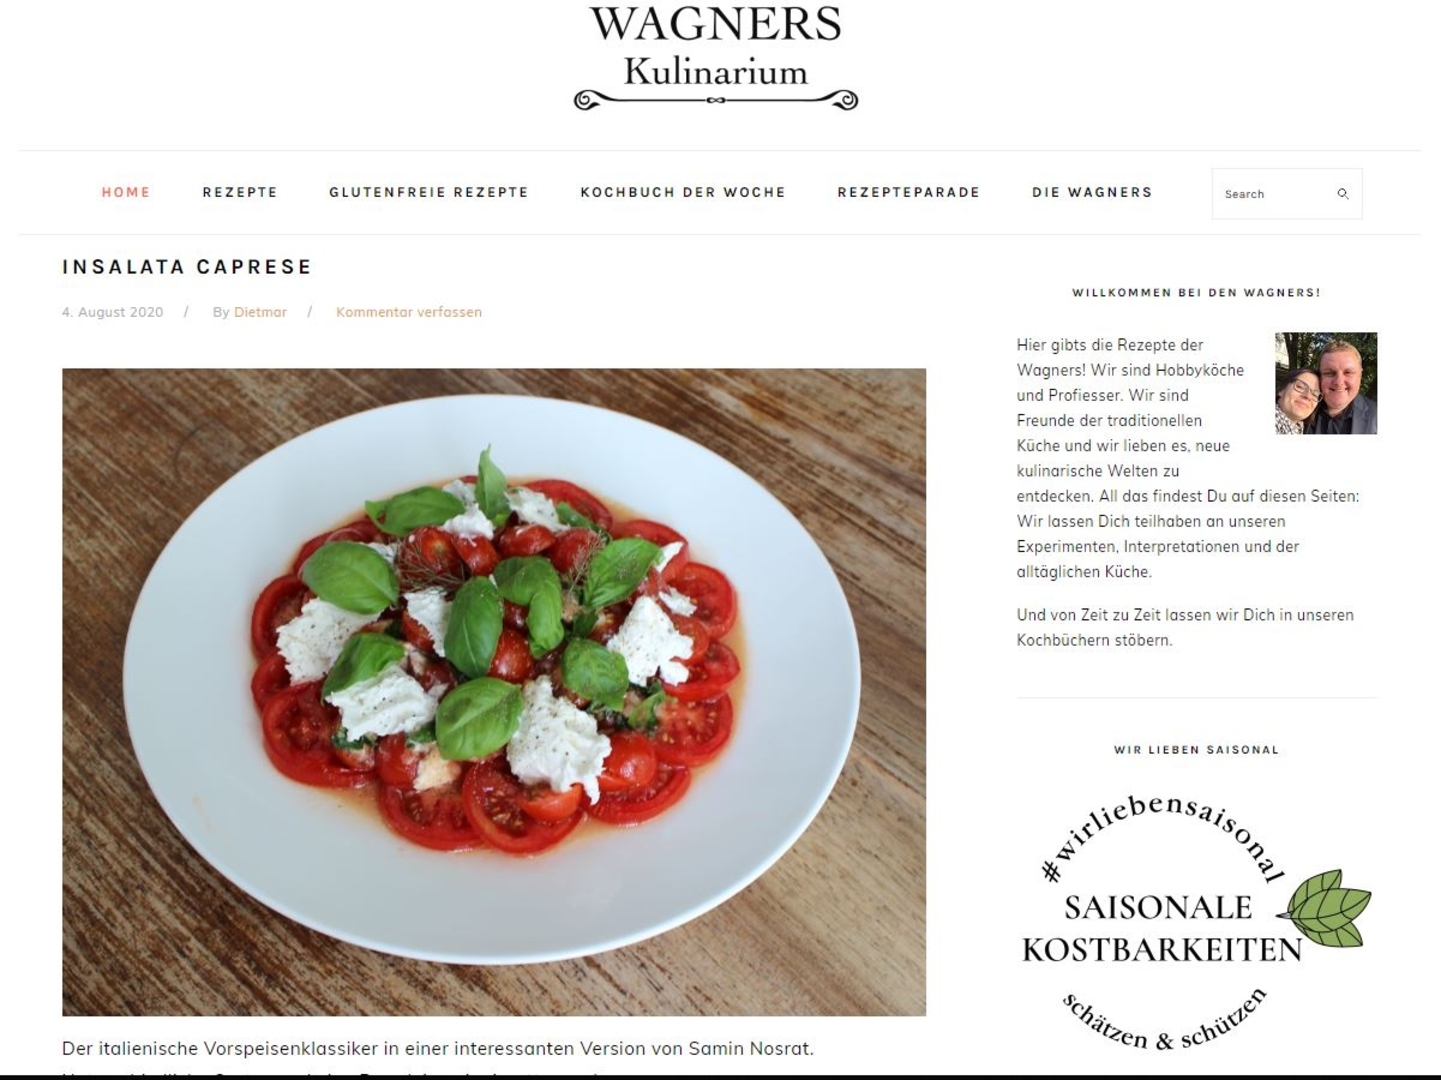 Titelbild zu Wagners Kulinarium